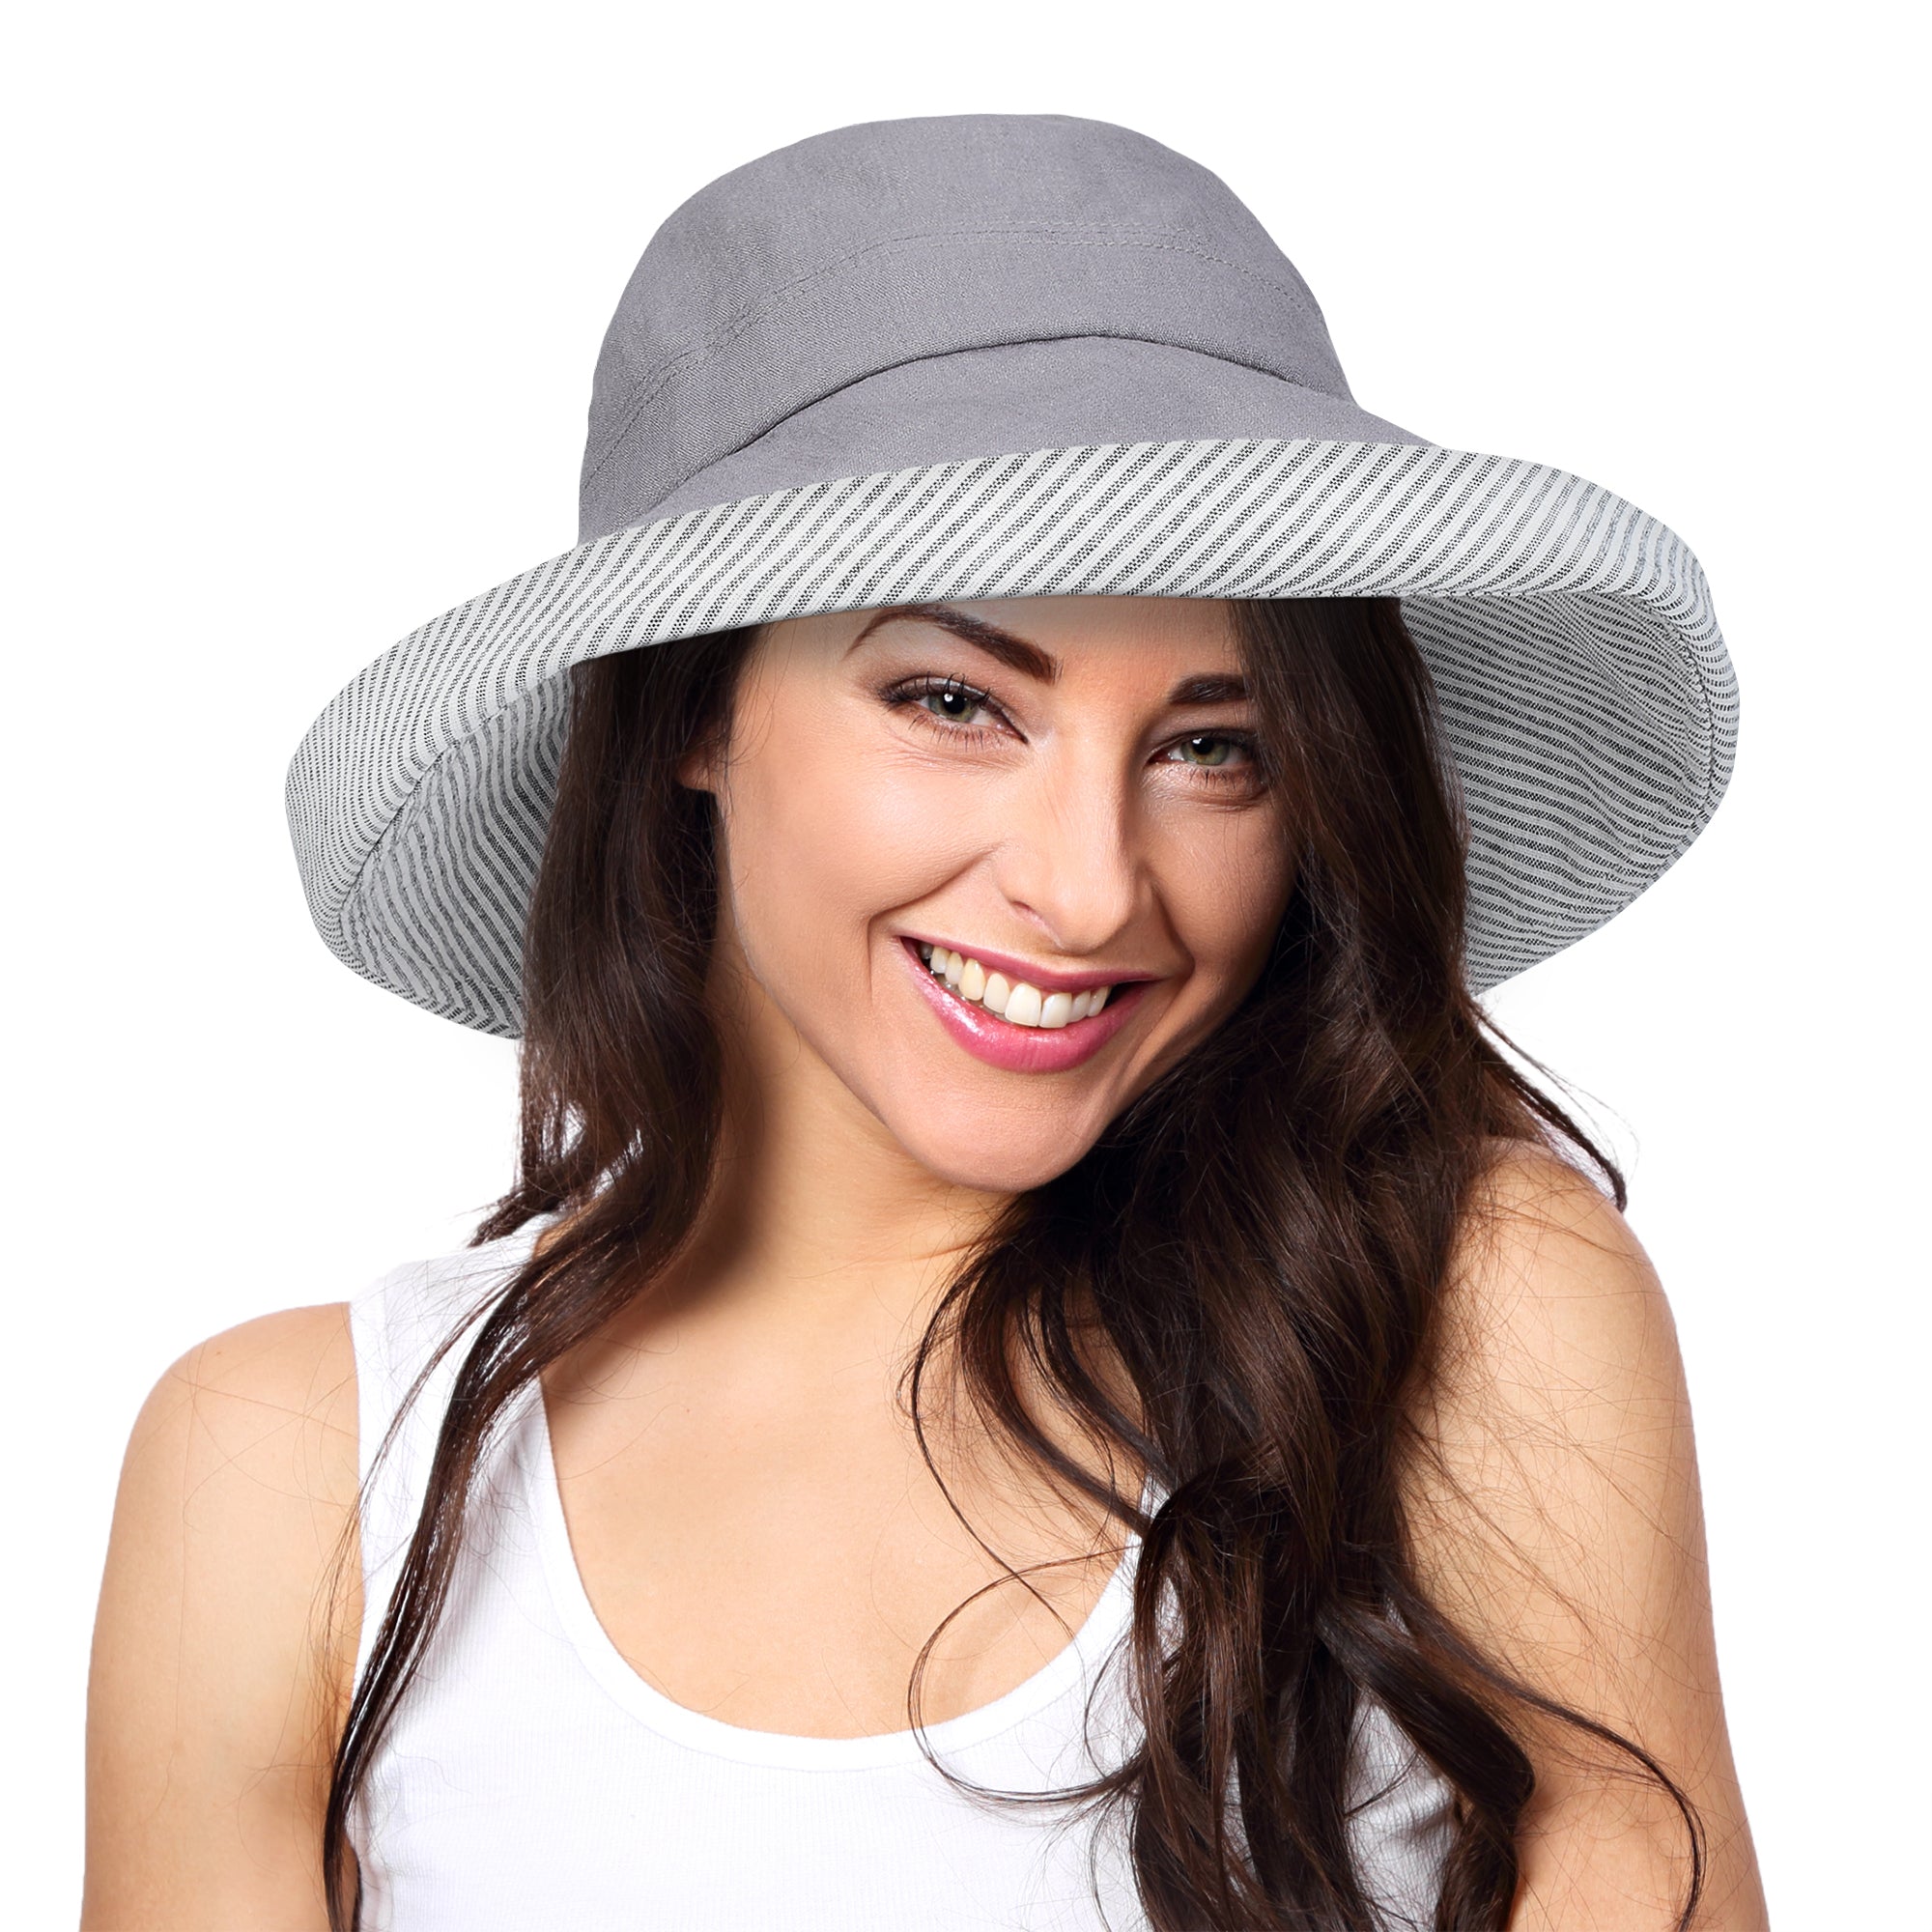 Tirrinia Chic & UV Protection with Women's Sun Hats, Wide Brim